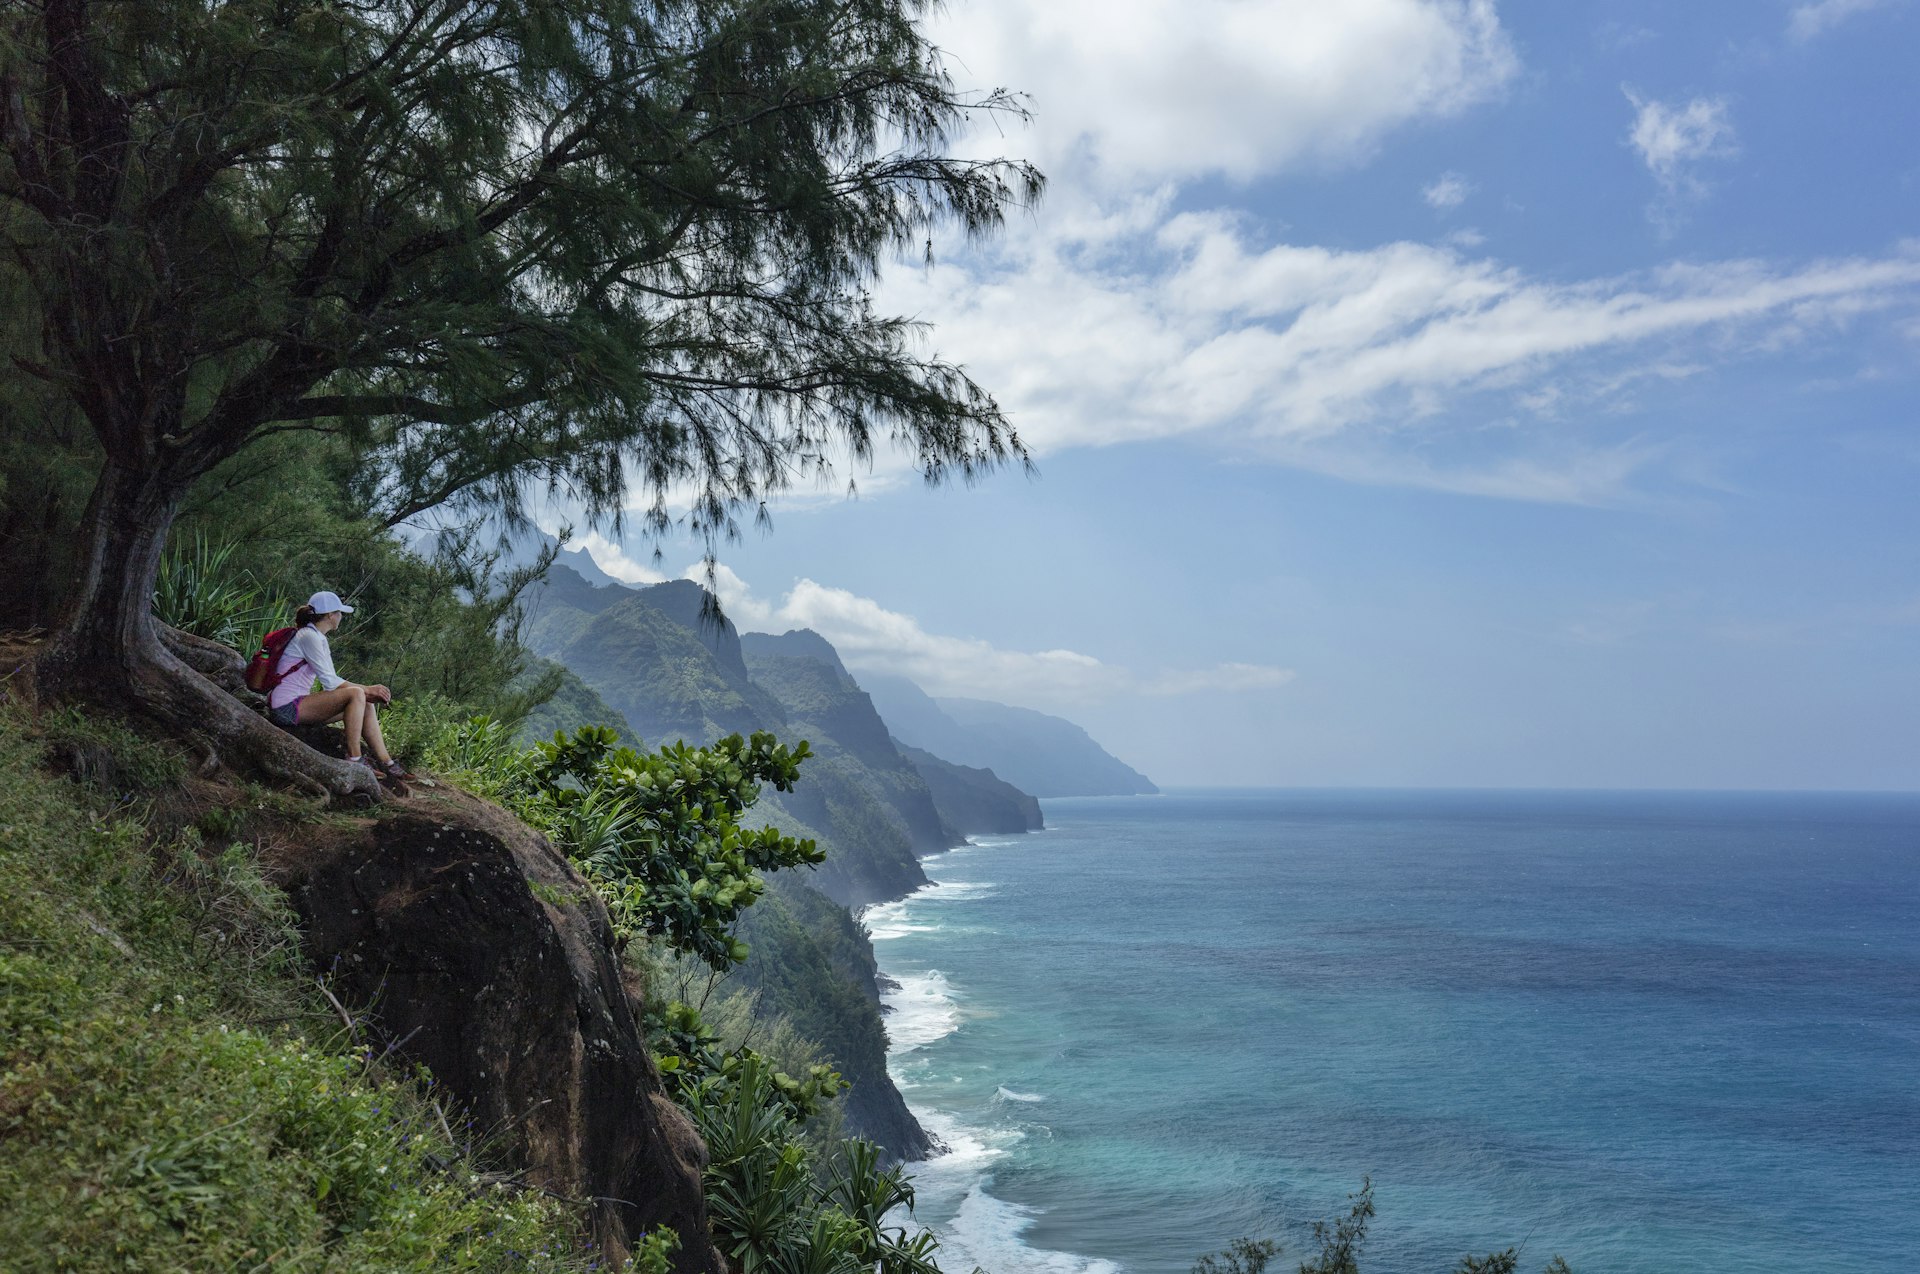 A hiker taking in the Na Pali Coast view, Kauai, Hawaii